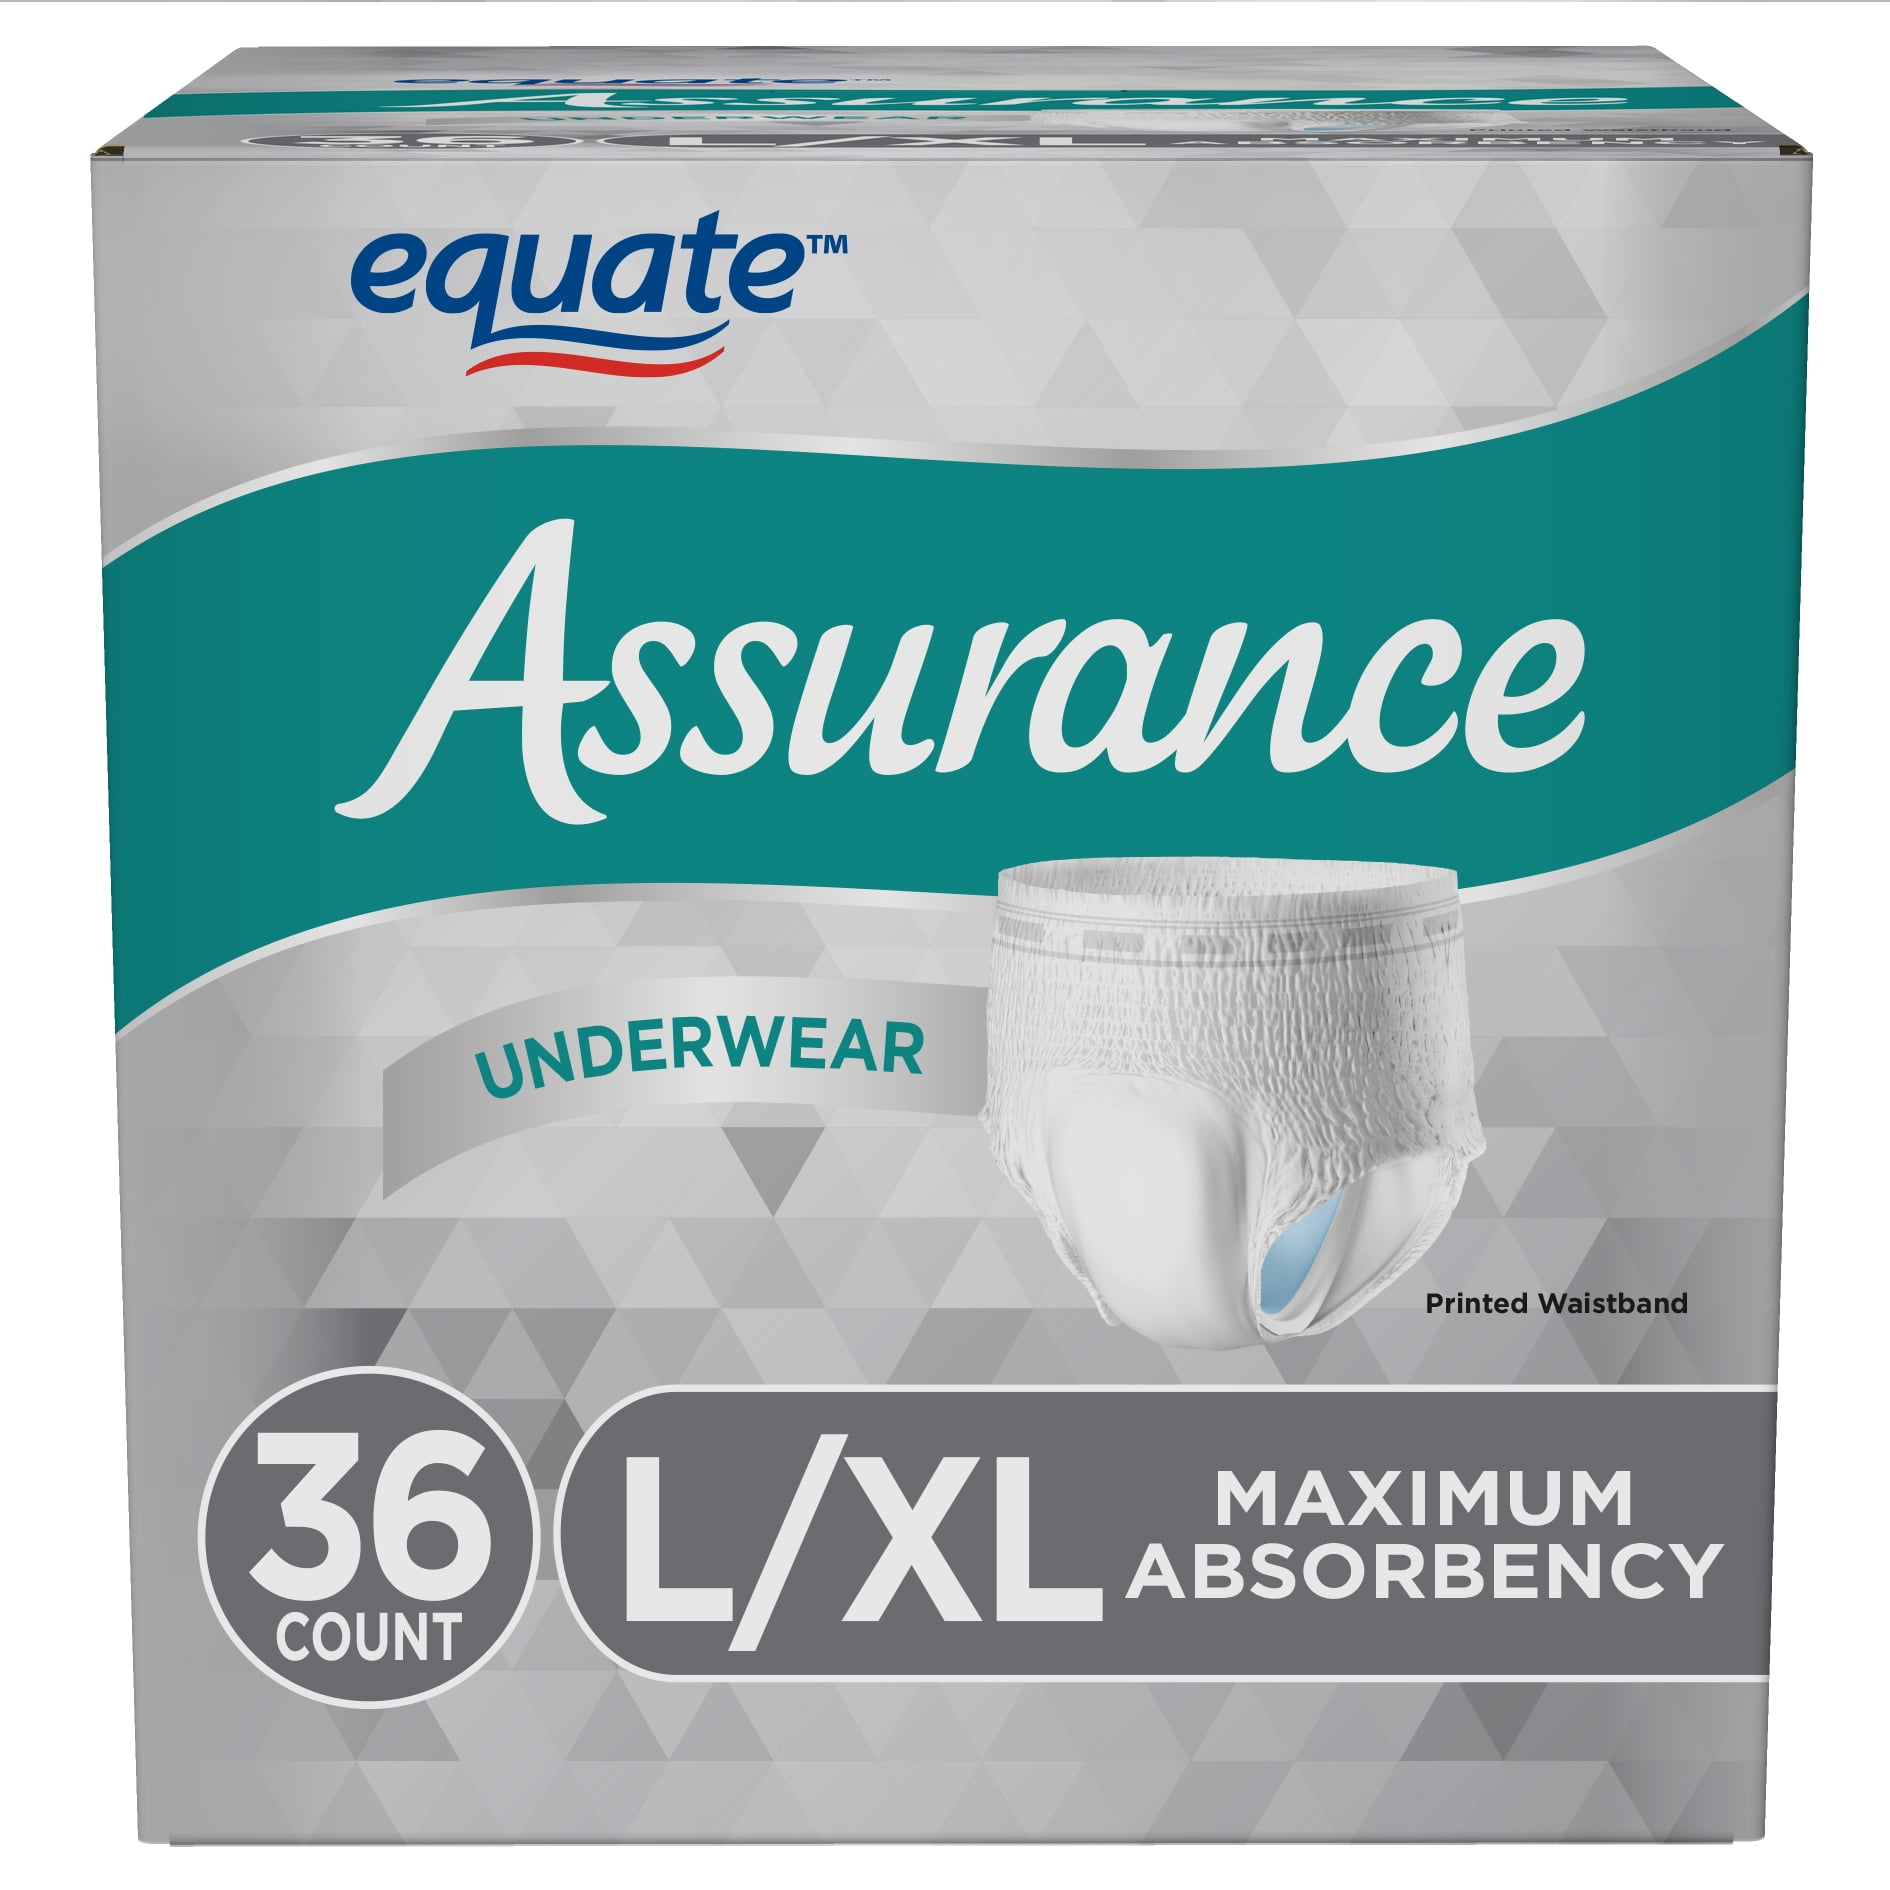 Assurance Underwear For Men Size L Xl 36 Count Walmart Com Walmart Com